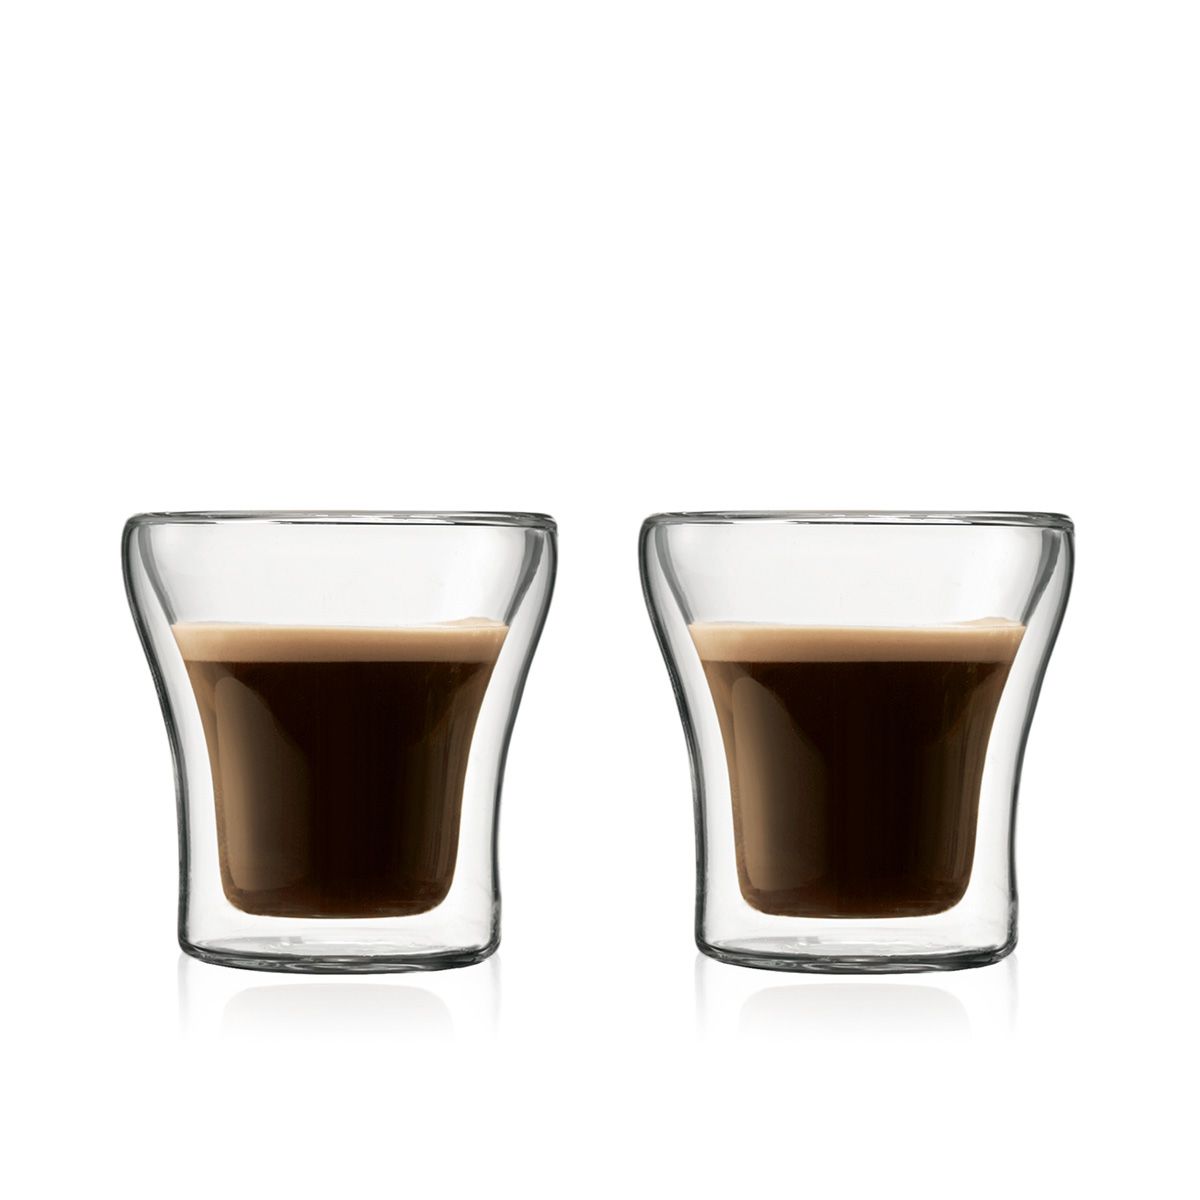 Verre double paroi / Bodum / Arlo's Coffee